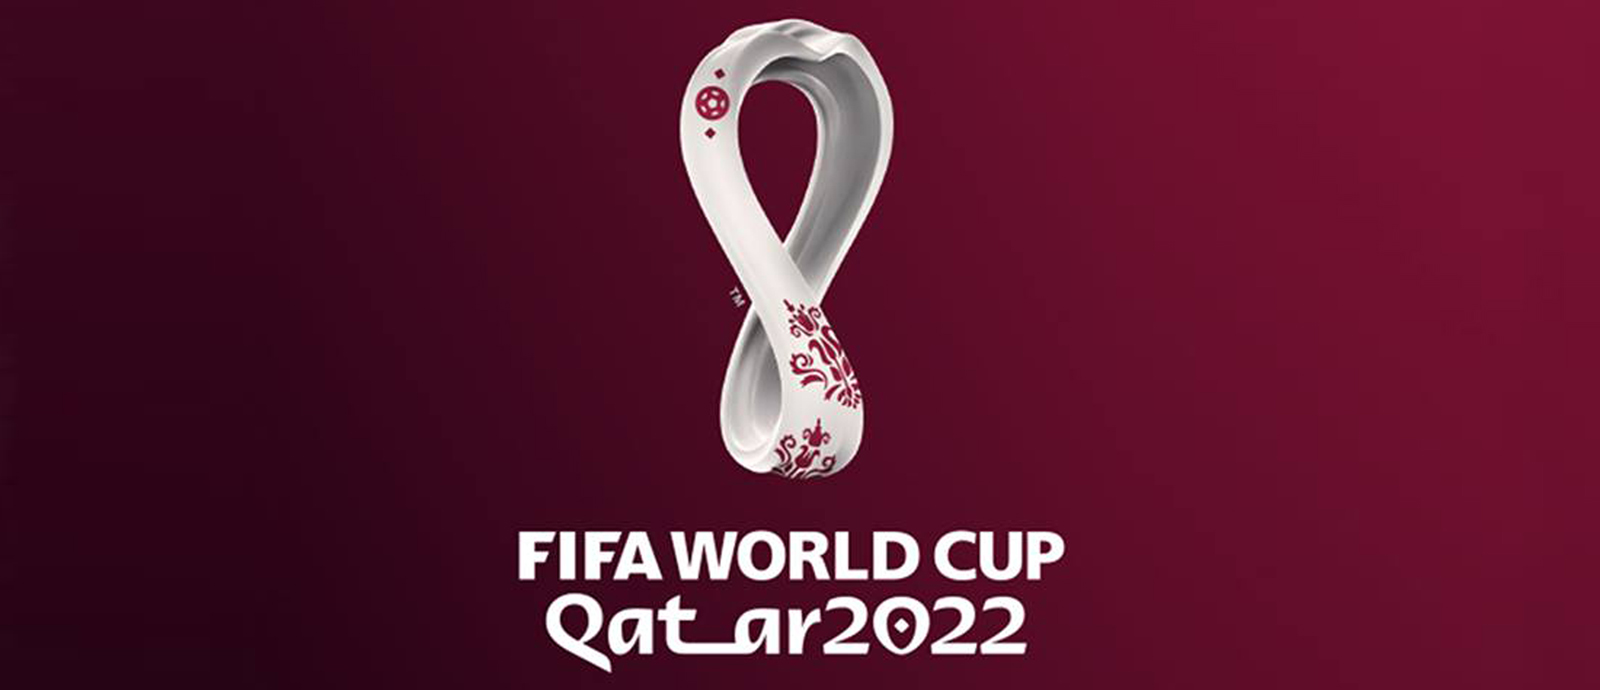  FIFA World Cup Qatar 2022™ emblem